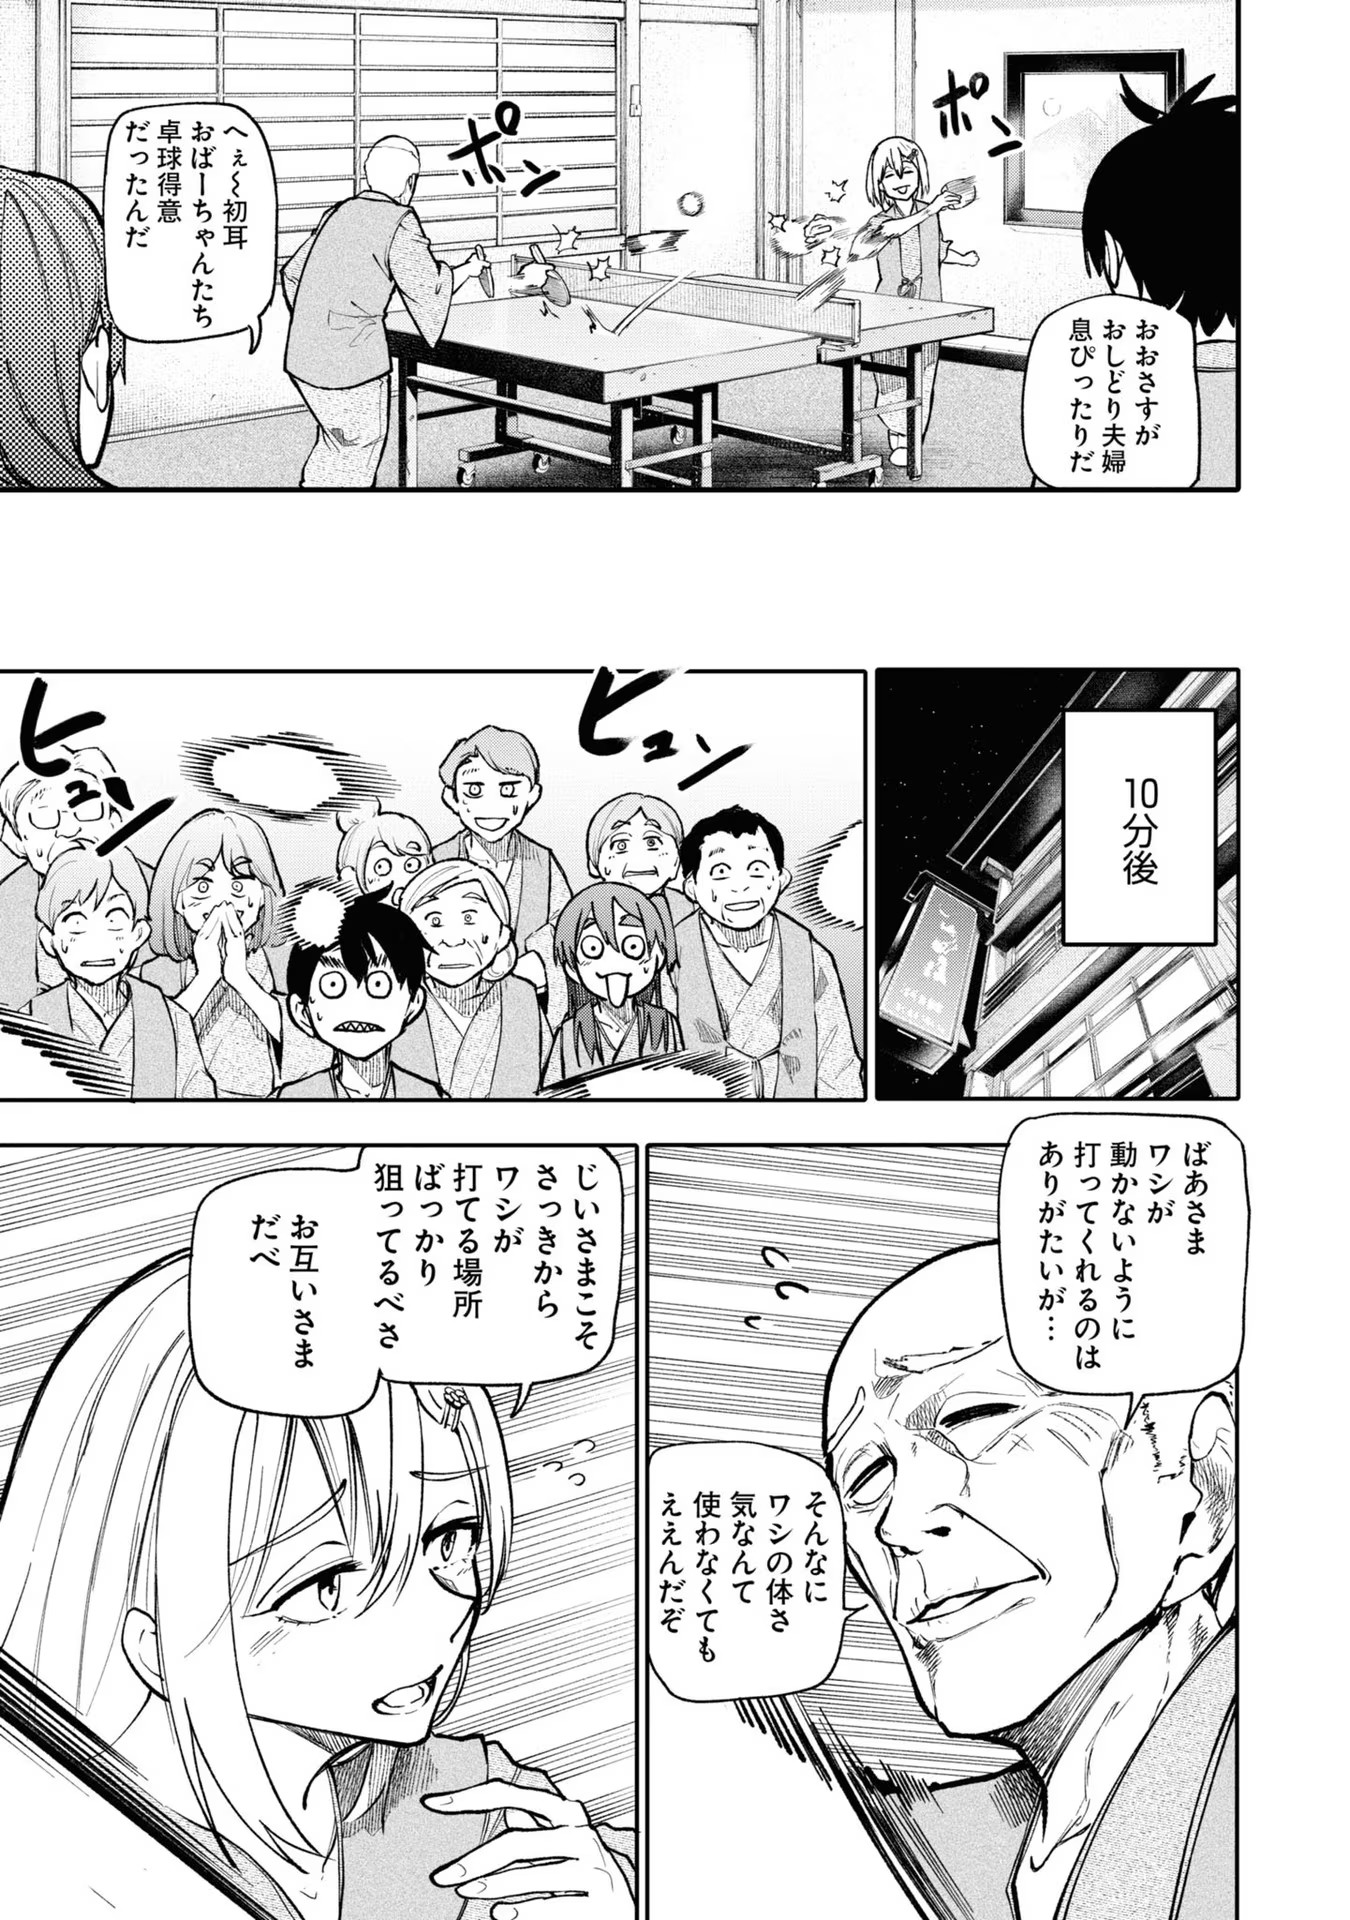 Ojii-san to Obaa-san ga Wakigaetta Hanashi - Chapter 108.5 - Page 3